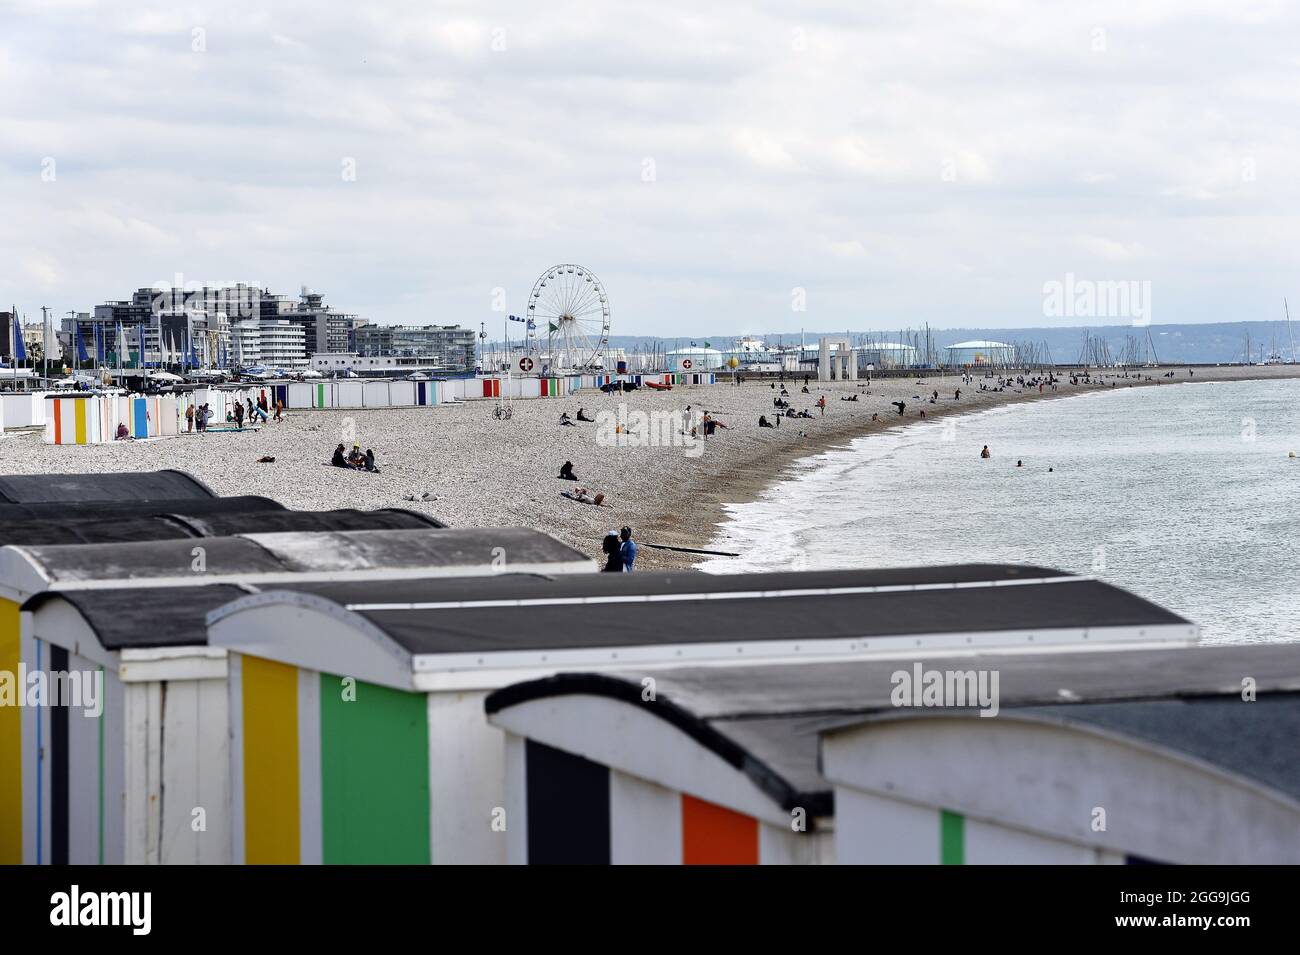 Plage du Havre - Seine Maritime - France Banque D'Images